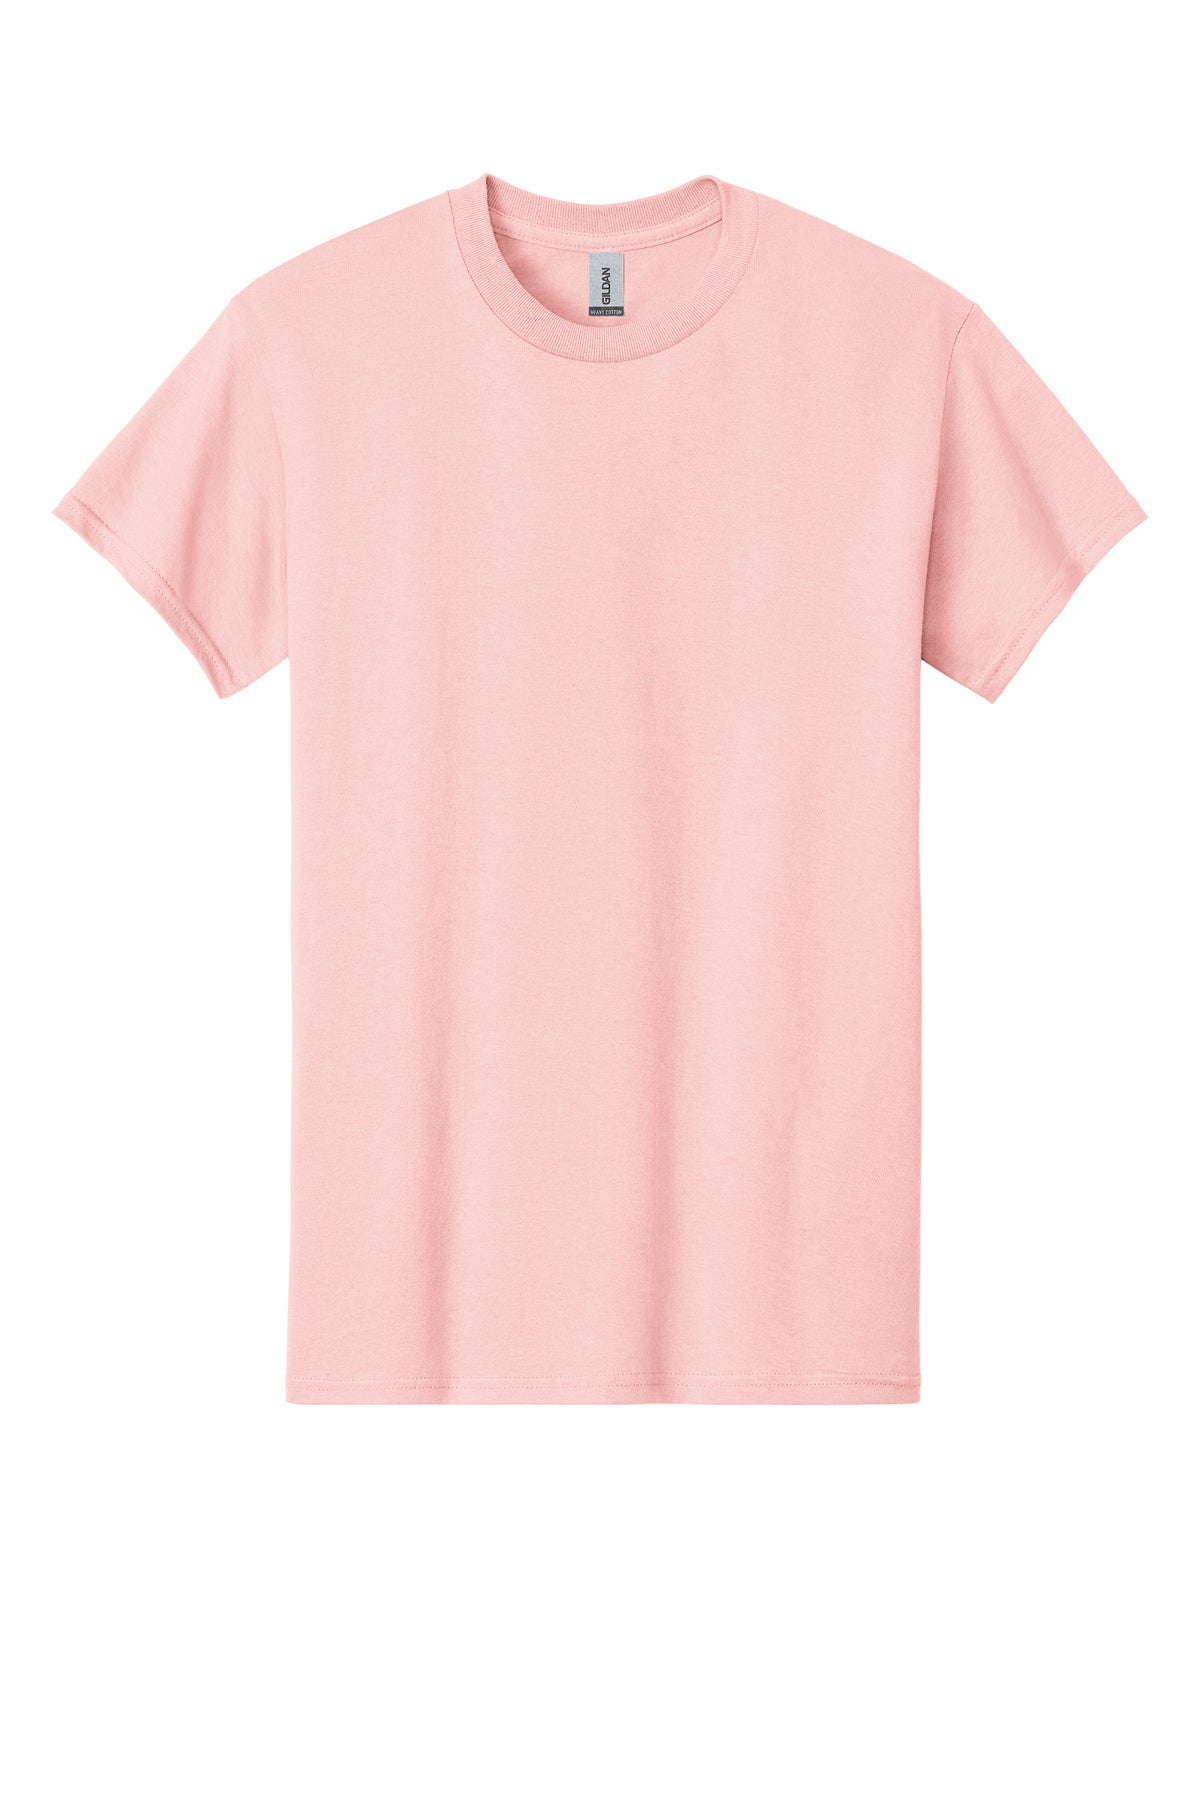 Gildan Mens/Unisex S/S Shirts Light pink